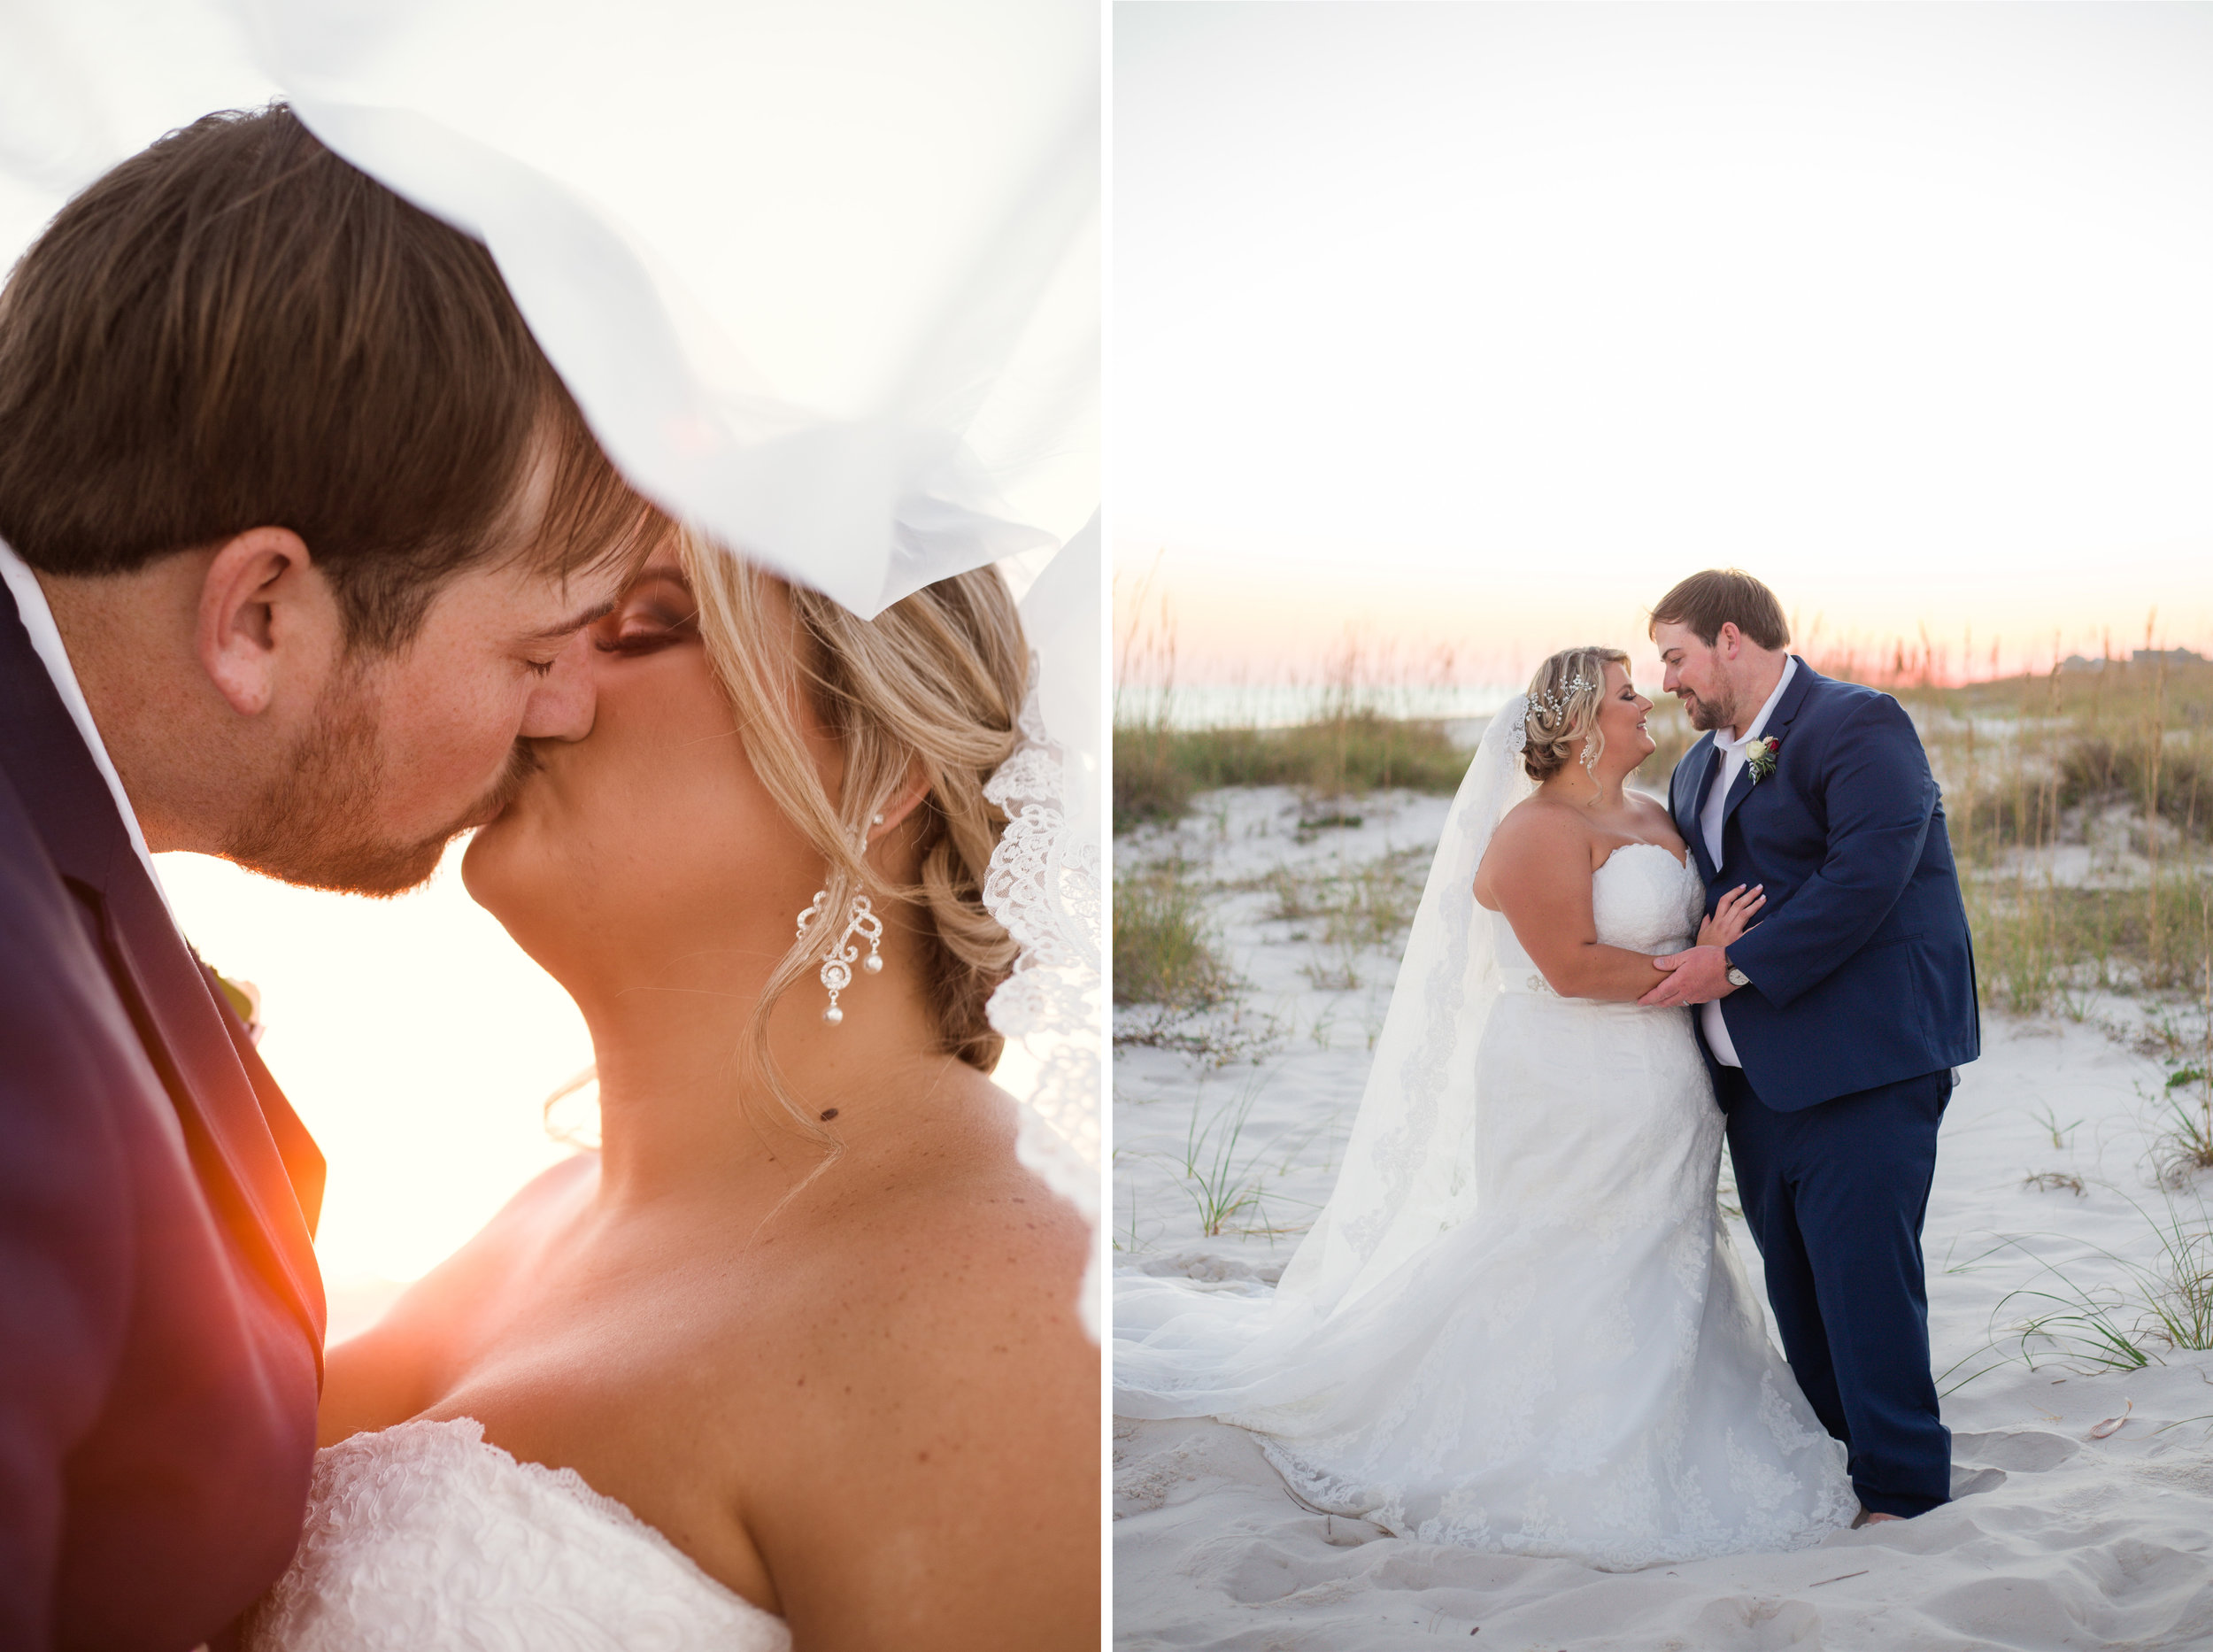 Gulf-Shores-Alabama-Beach-House-Wedding-Photography-orange beach-fairhope-mobile-pensacola-navarre-destin-photo-photographer-wedding video-videography.jpg